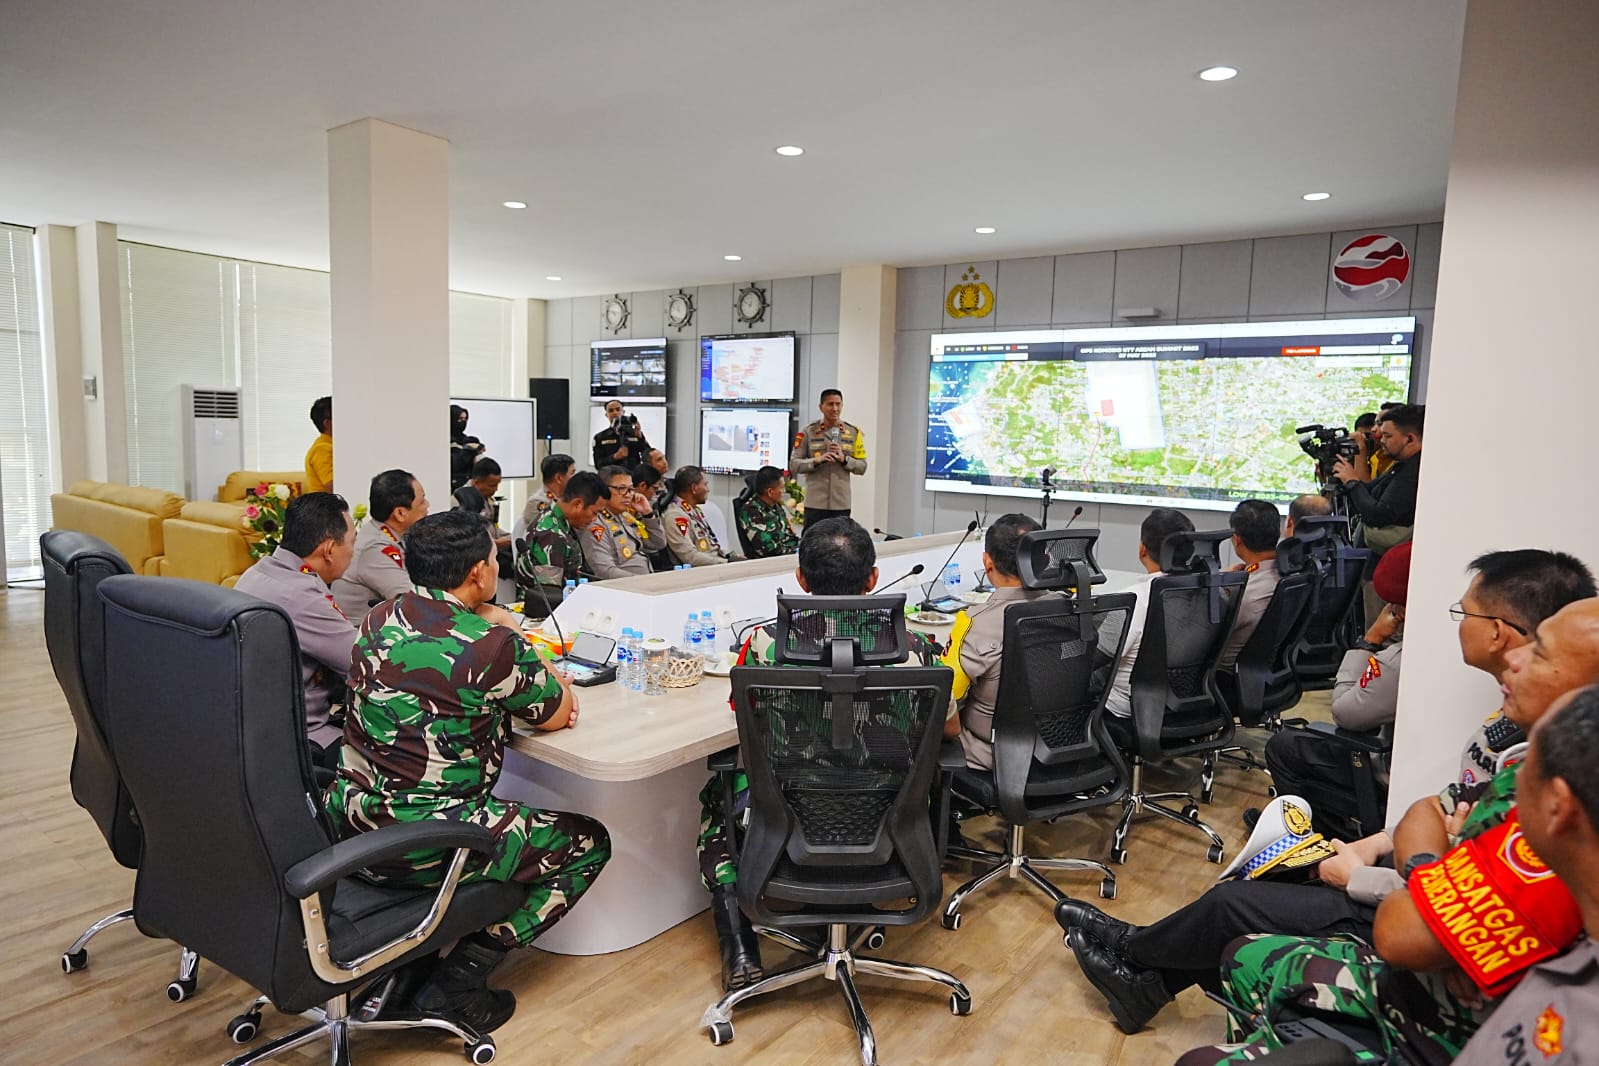 Tinjau 91 Command Center, Kapolri dan Panglima TNI Pastikan Kesiapan Personel Jelang KTT ASEAN 